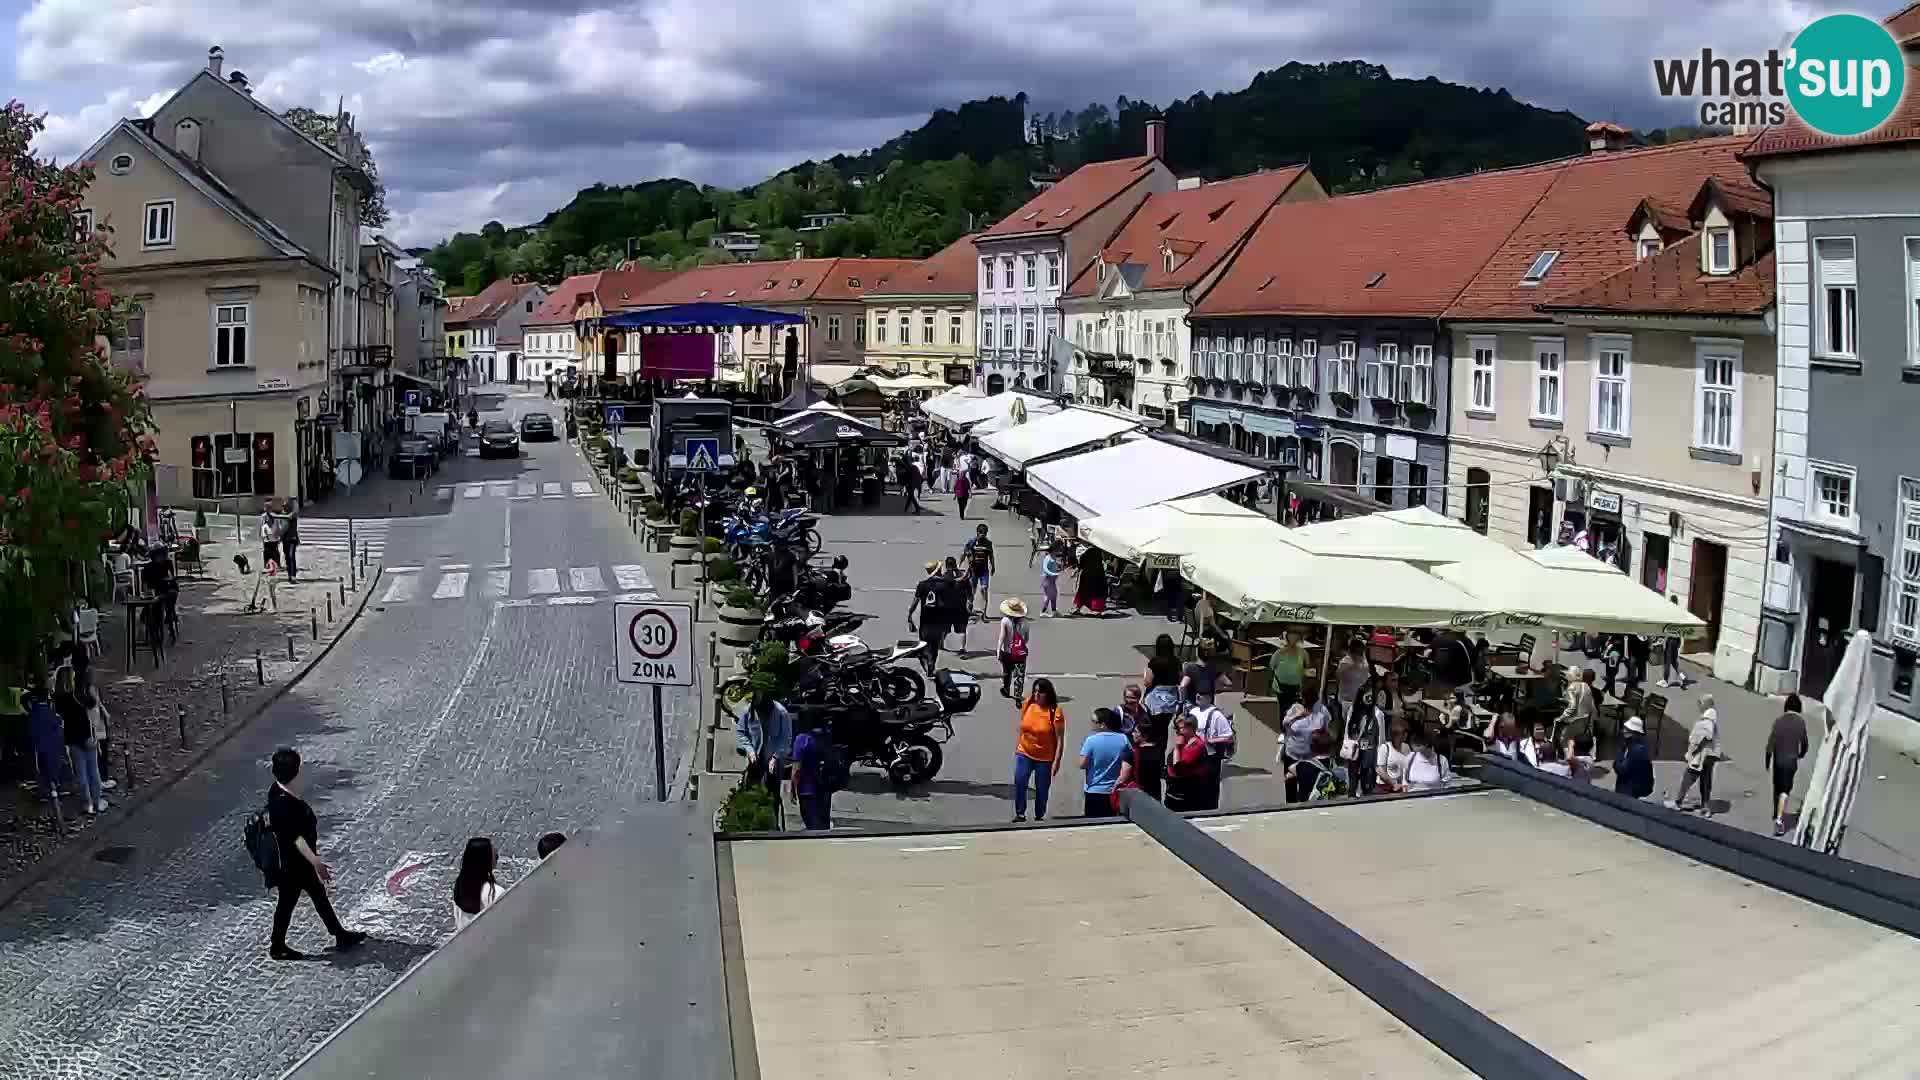 Samobor – Piazza centrale dedicata a re Tomislav